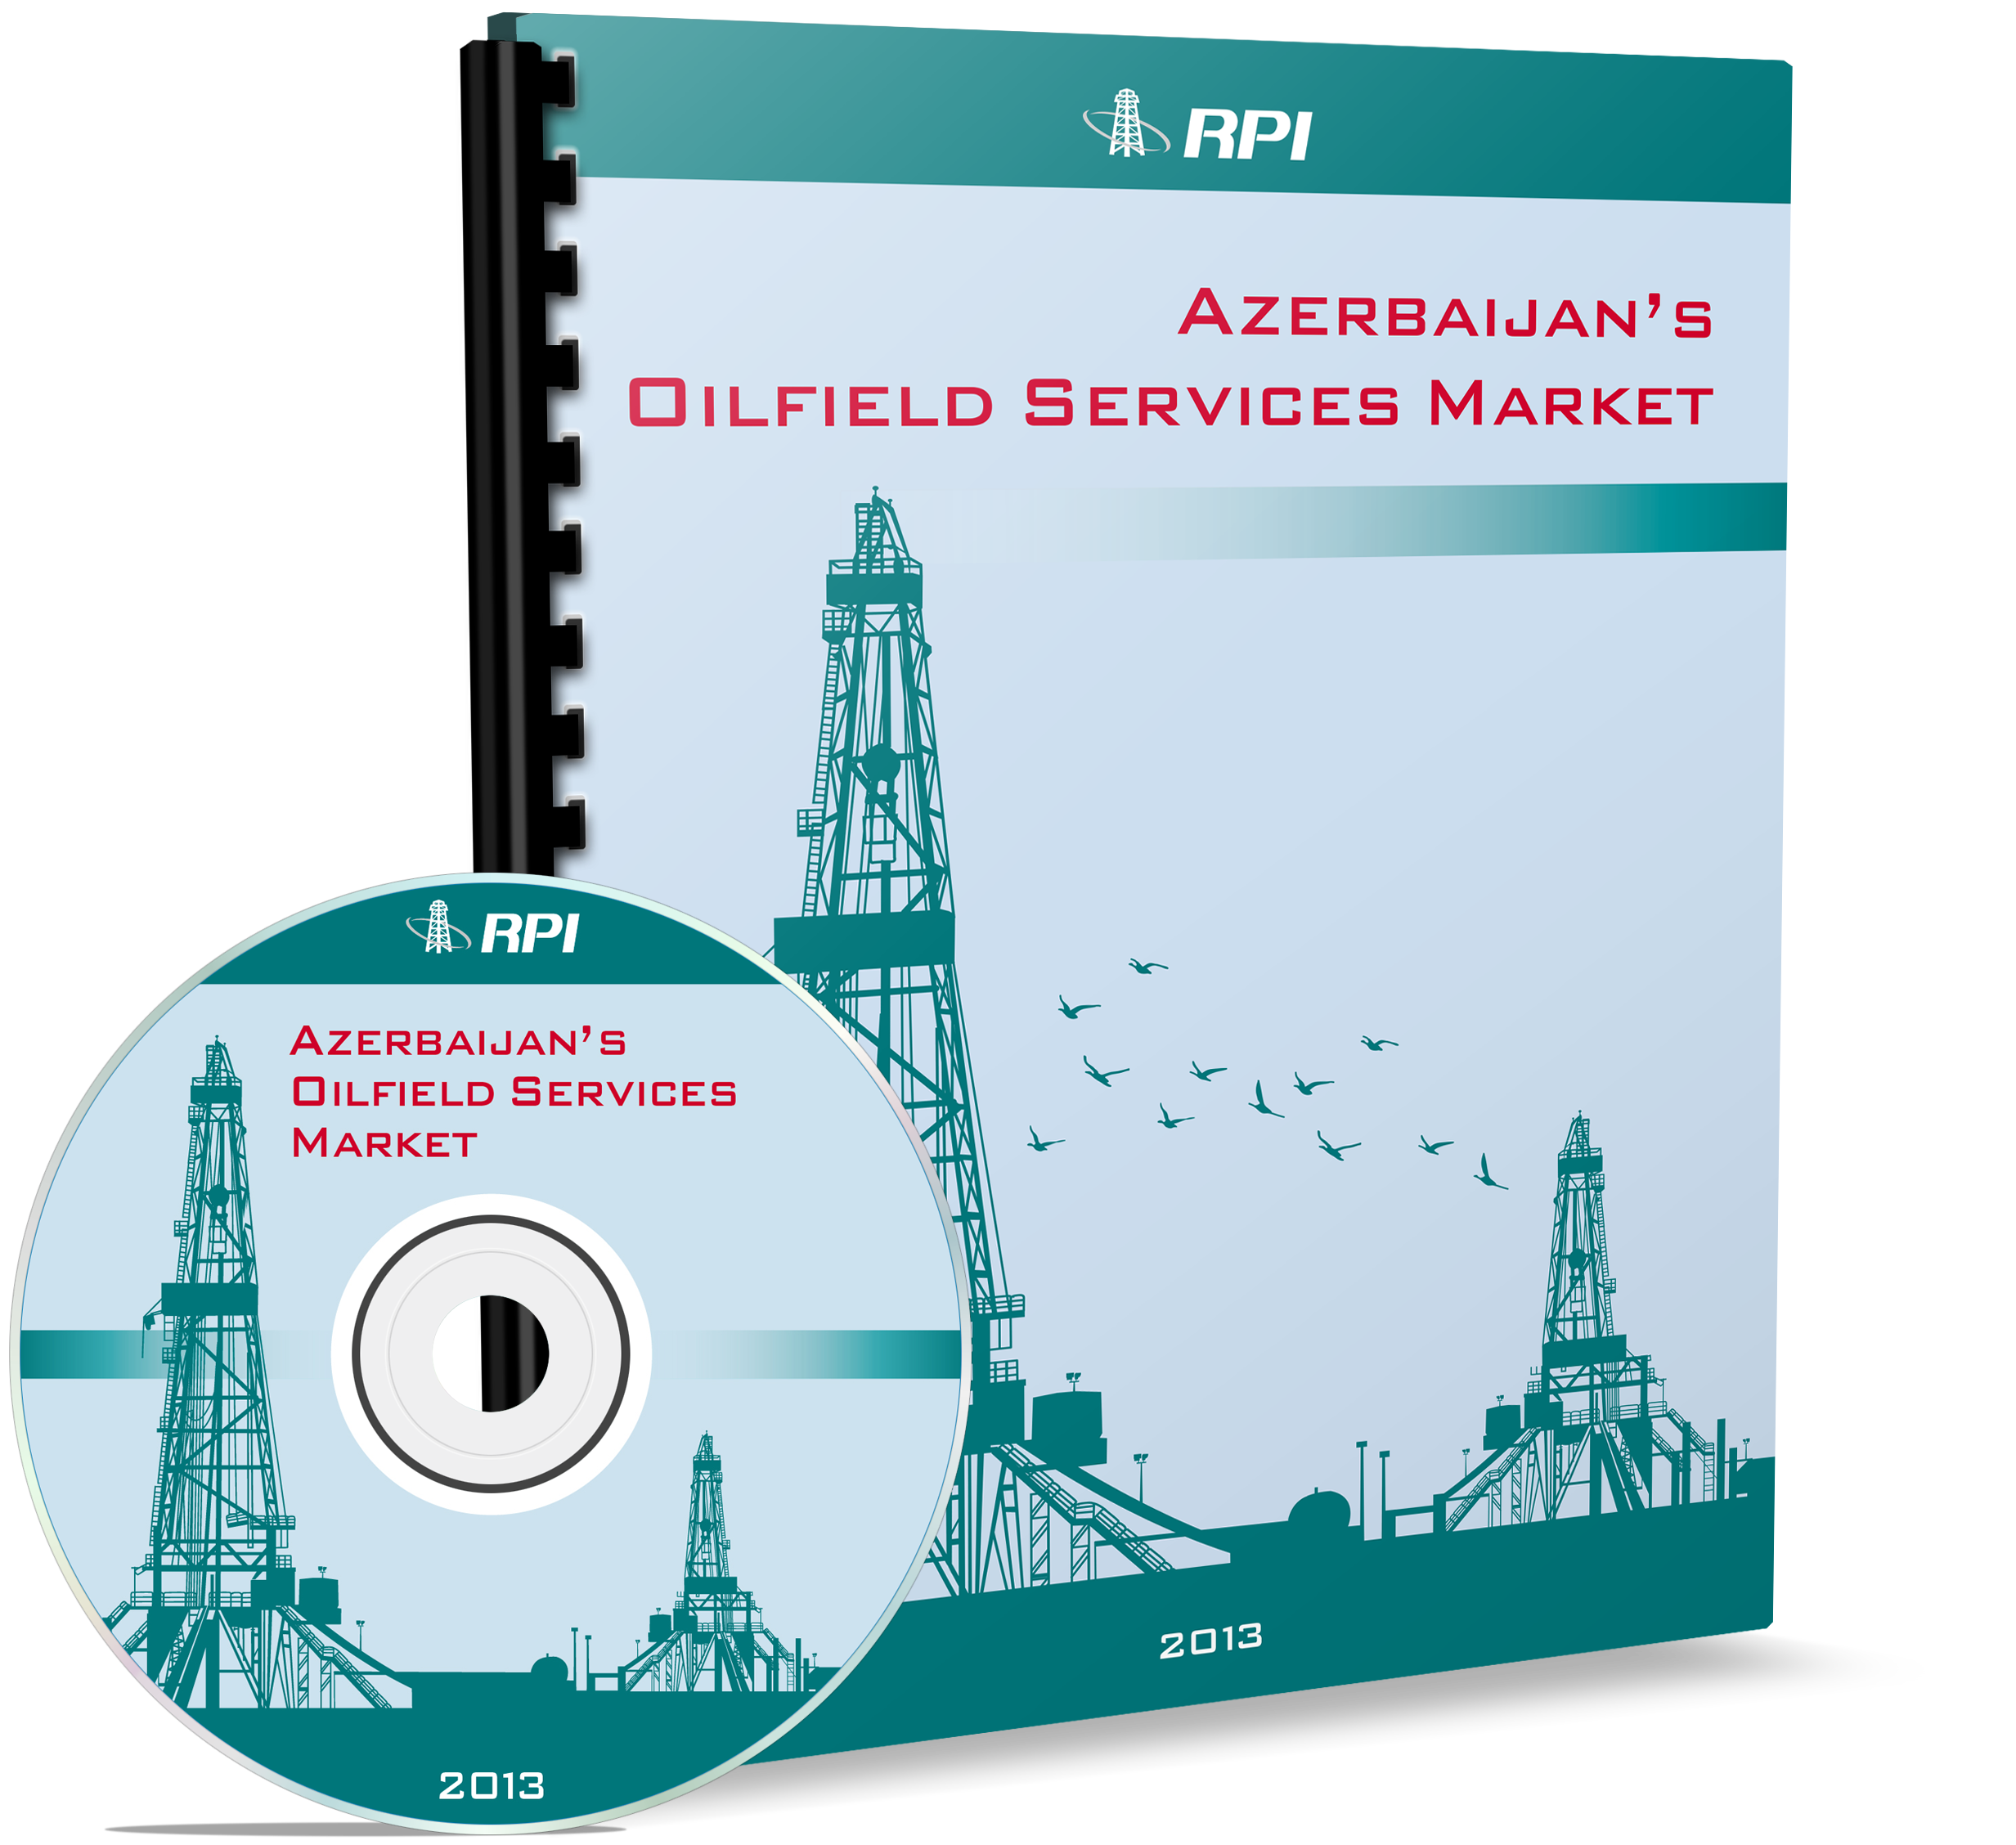 Azerbaijan's Oilfield Services Market 2013